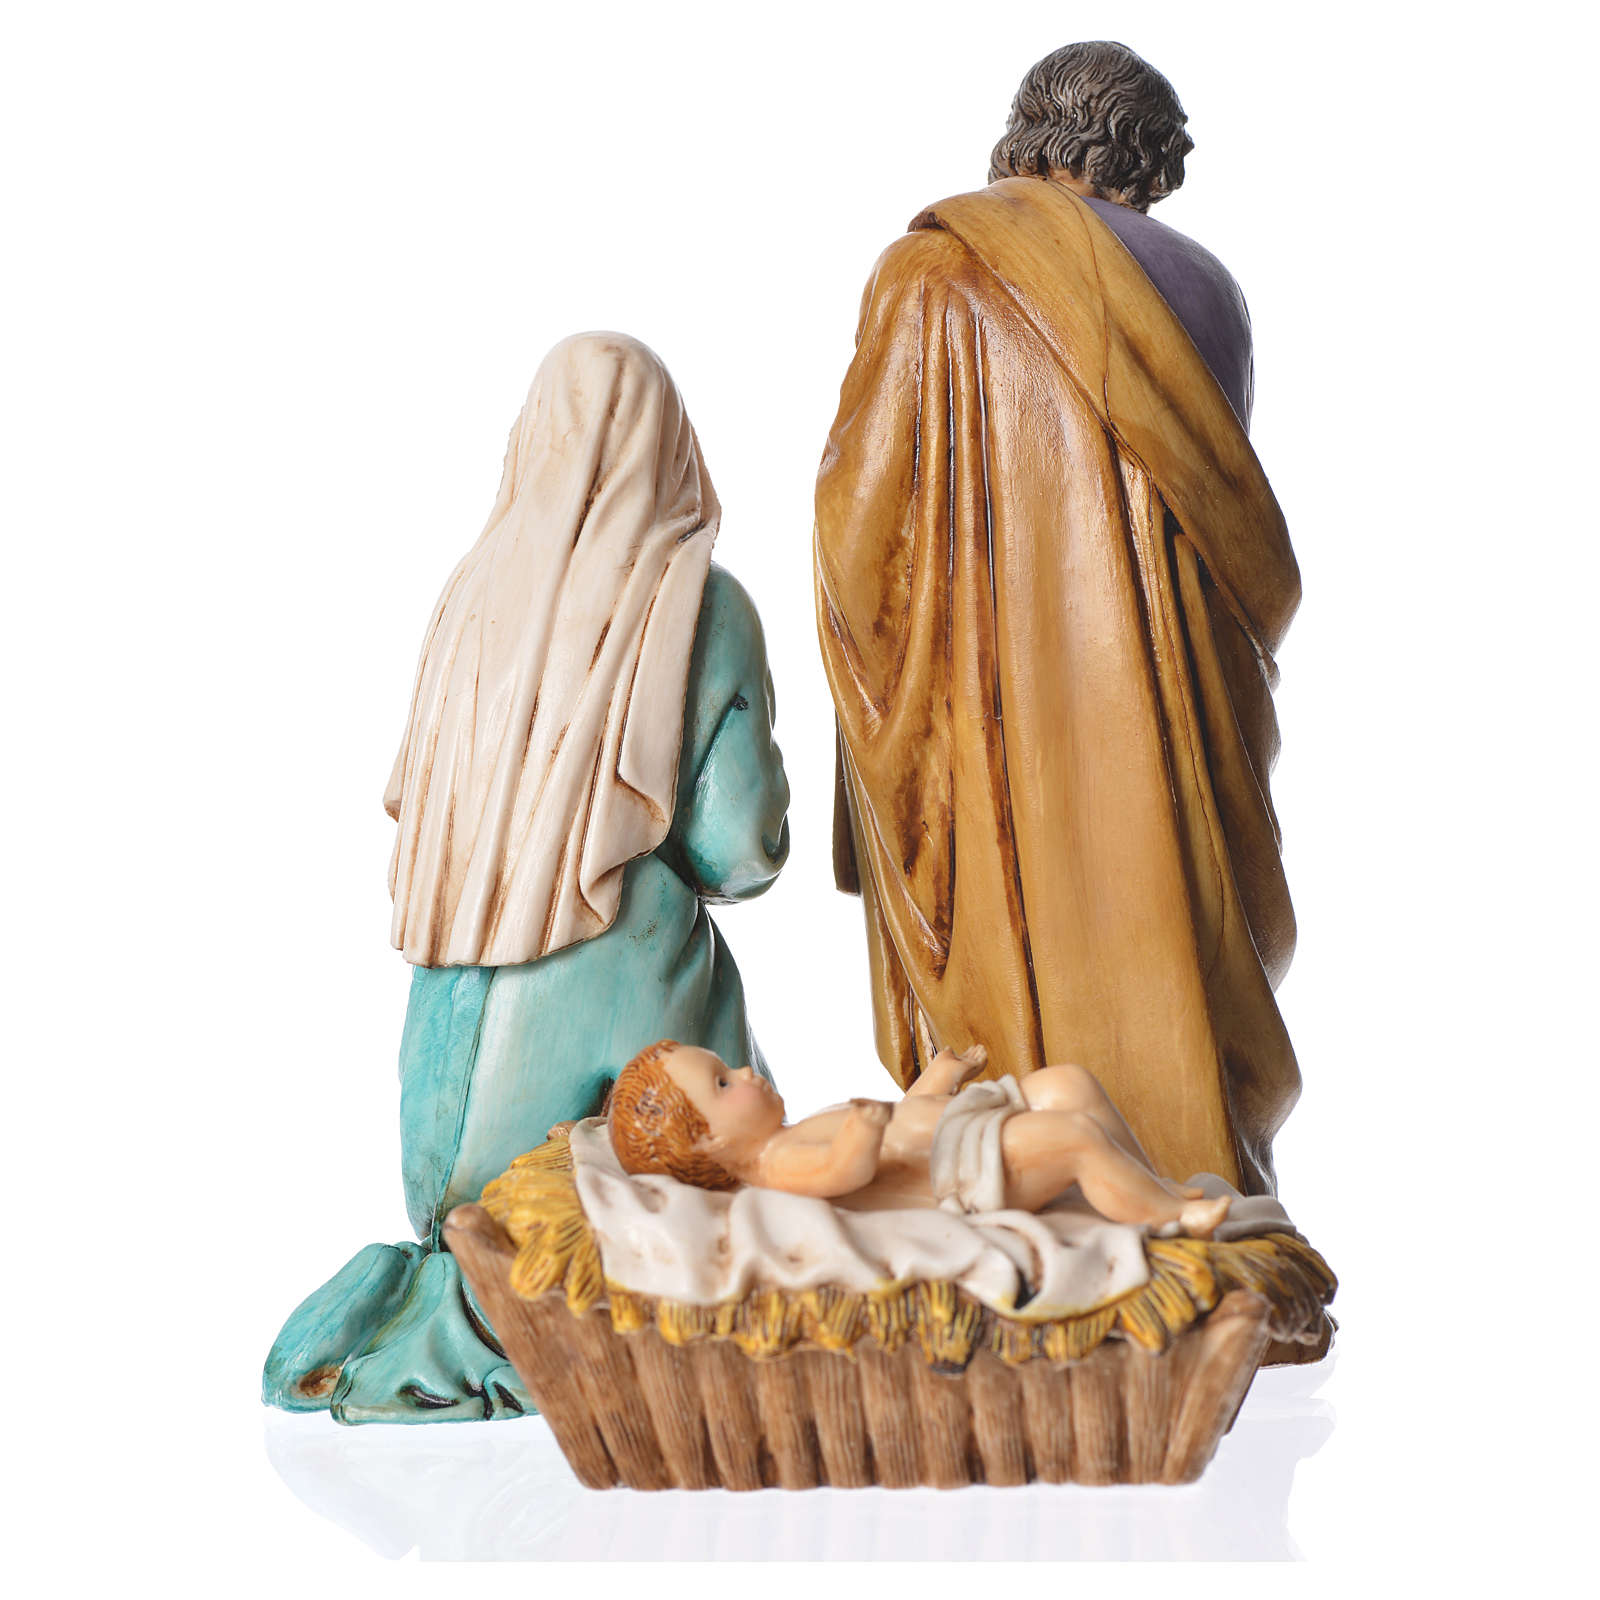 13cm Moranduzzo Holyart Wayfarer with Donkey Nativity Figurine